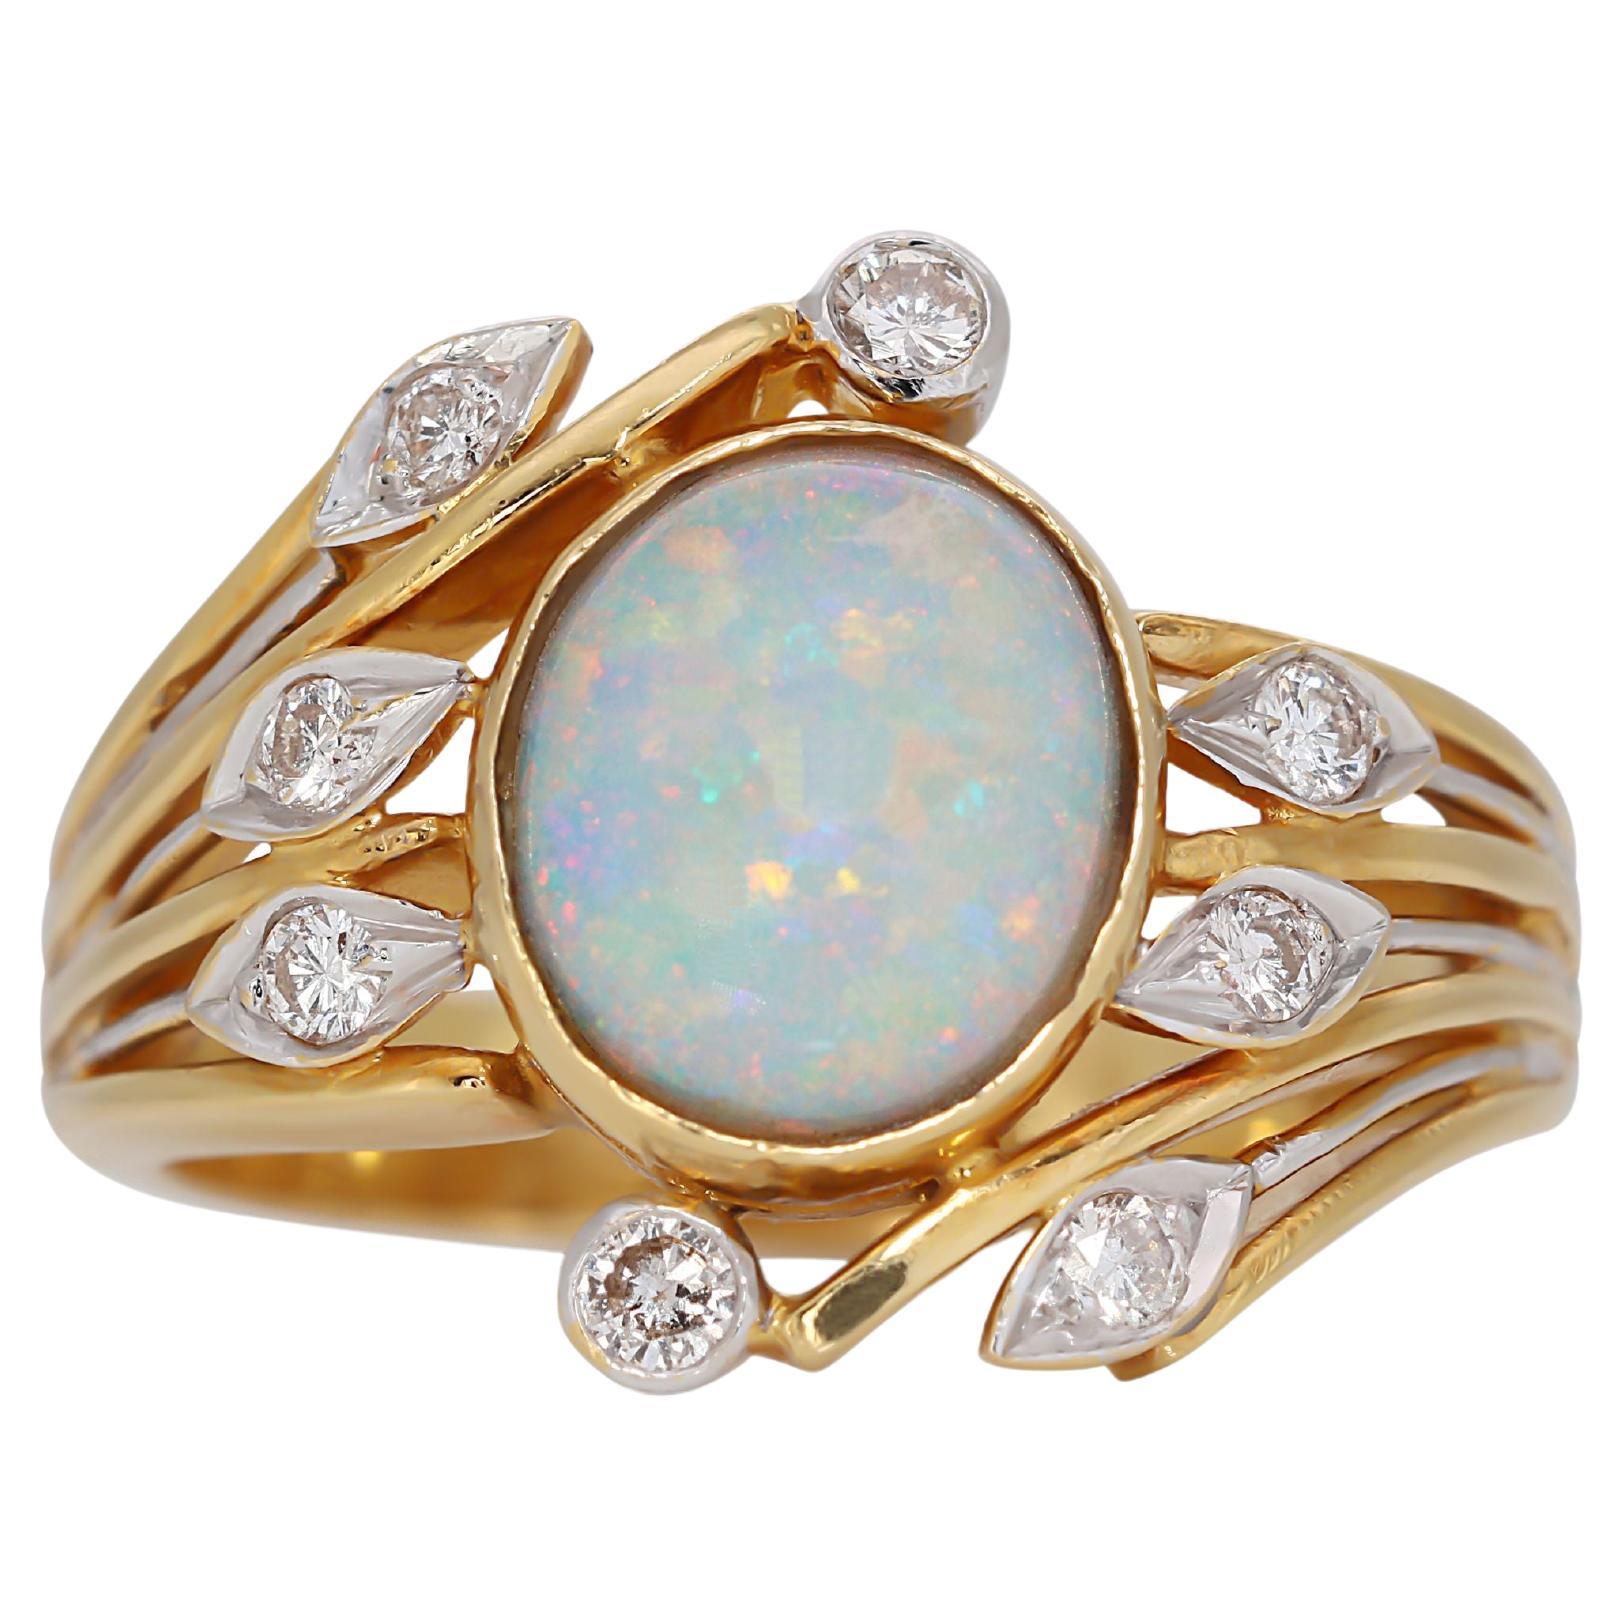  Elegant 20K Yellow Gold Opal Diamond Ring w/ 0.12 ct Natural Diamonds NGI Cert For Sale